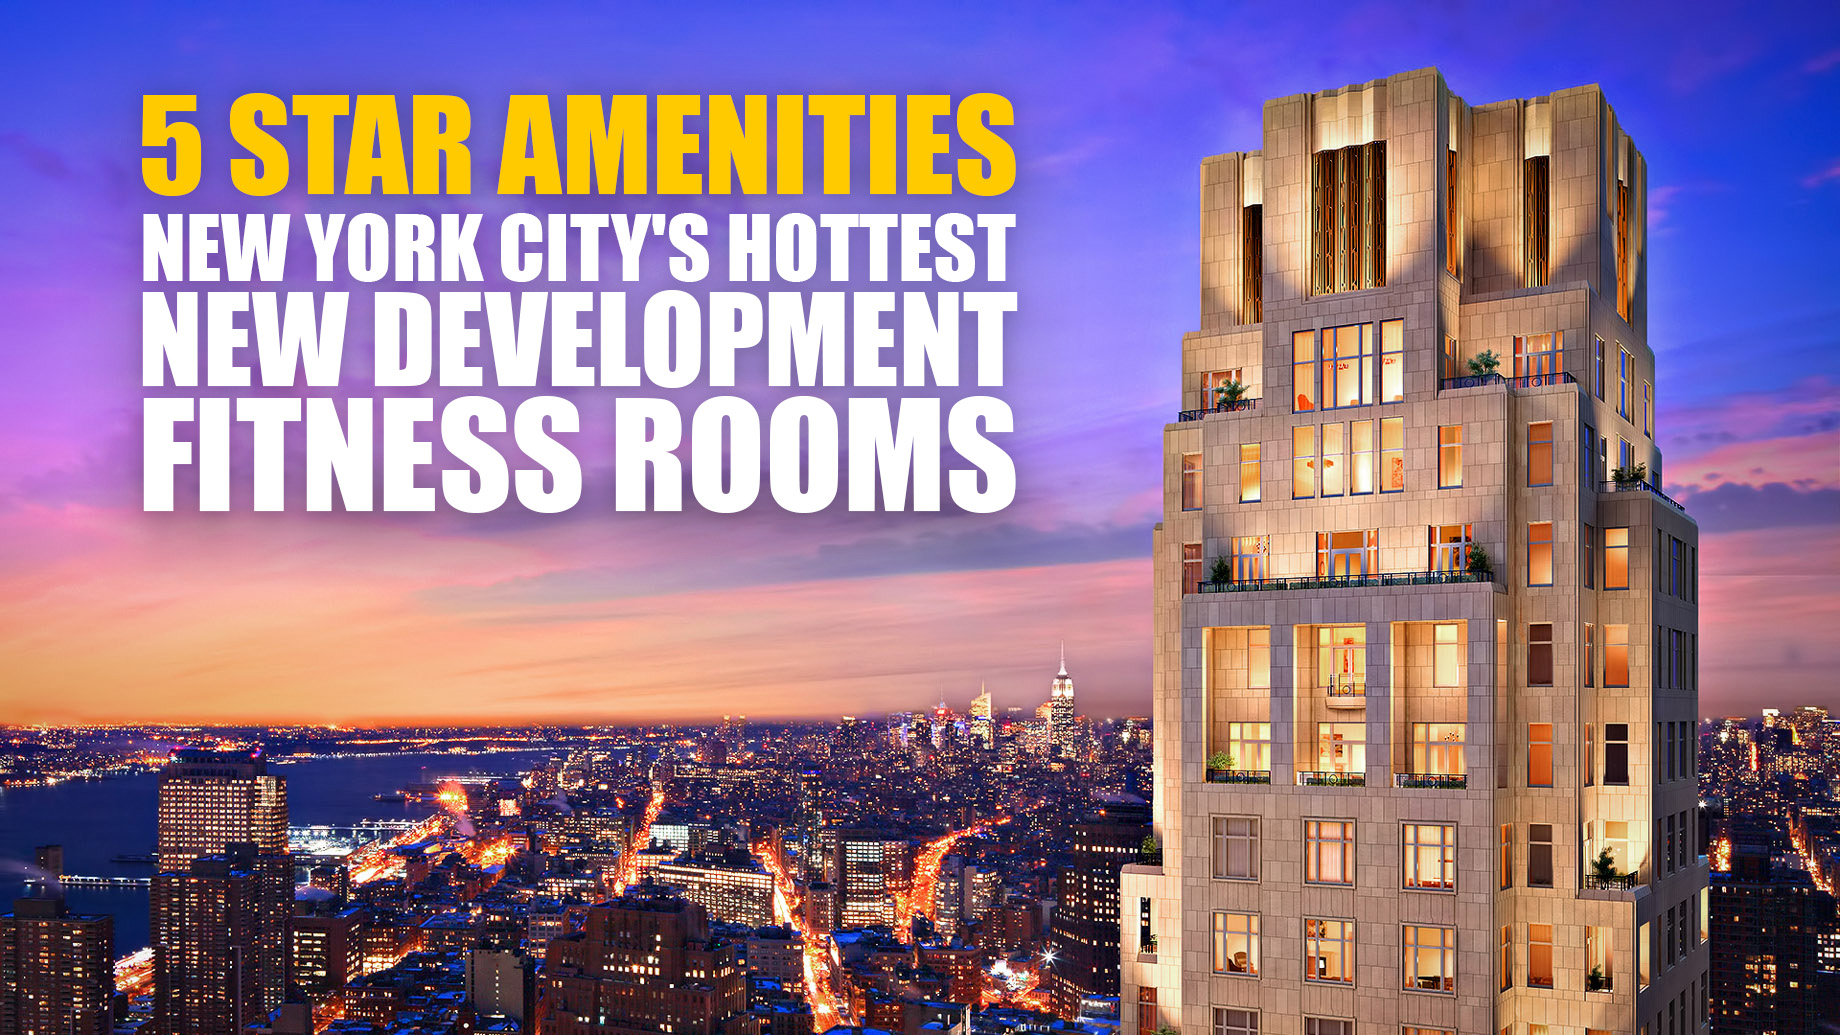 5 Star Amenities - New York City's Hottest New Development Fitness Rooms